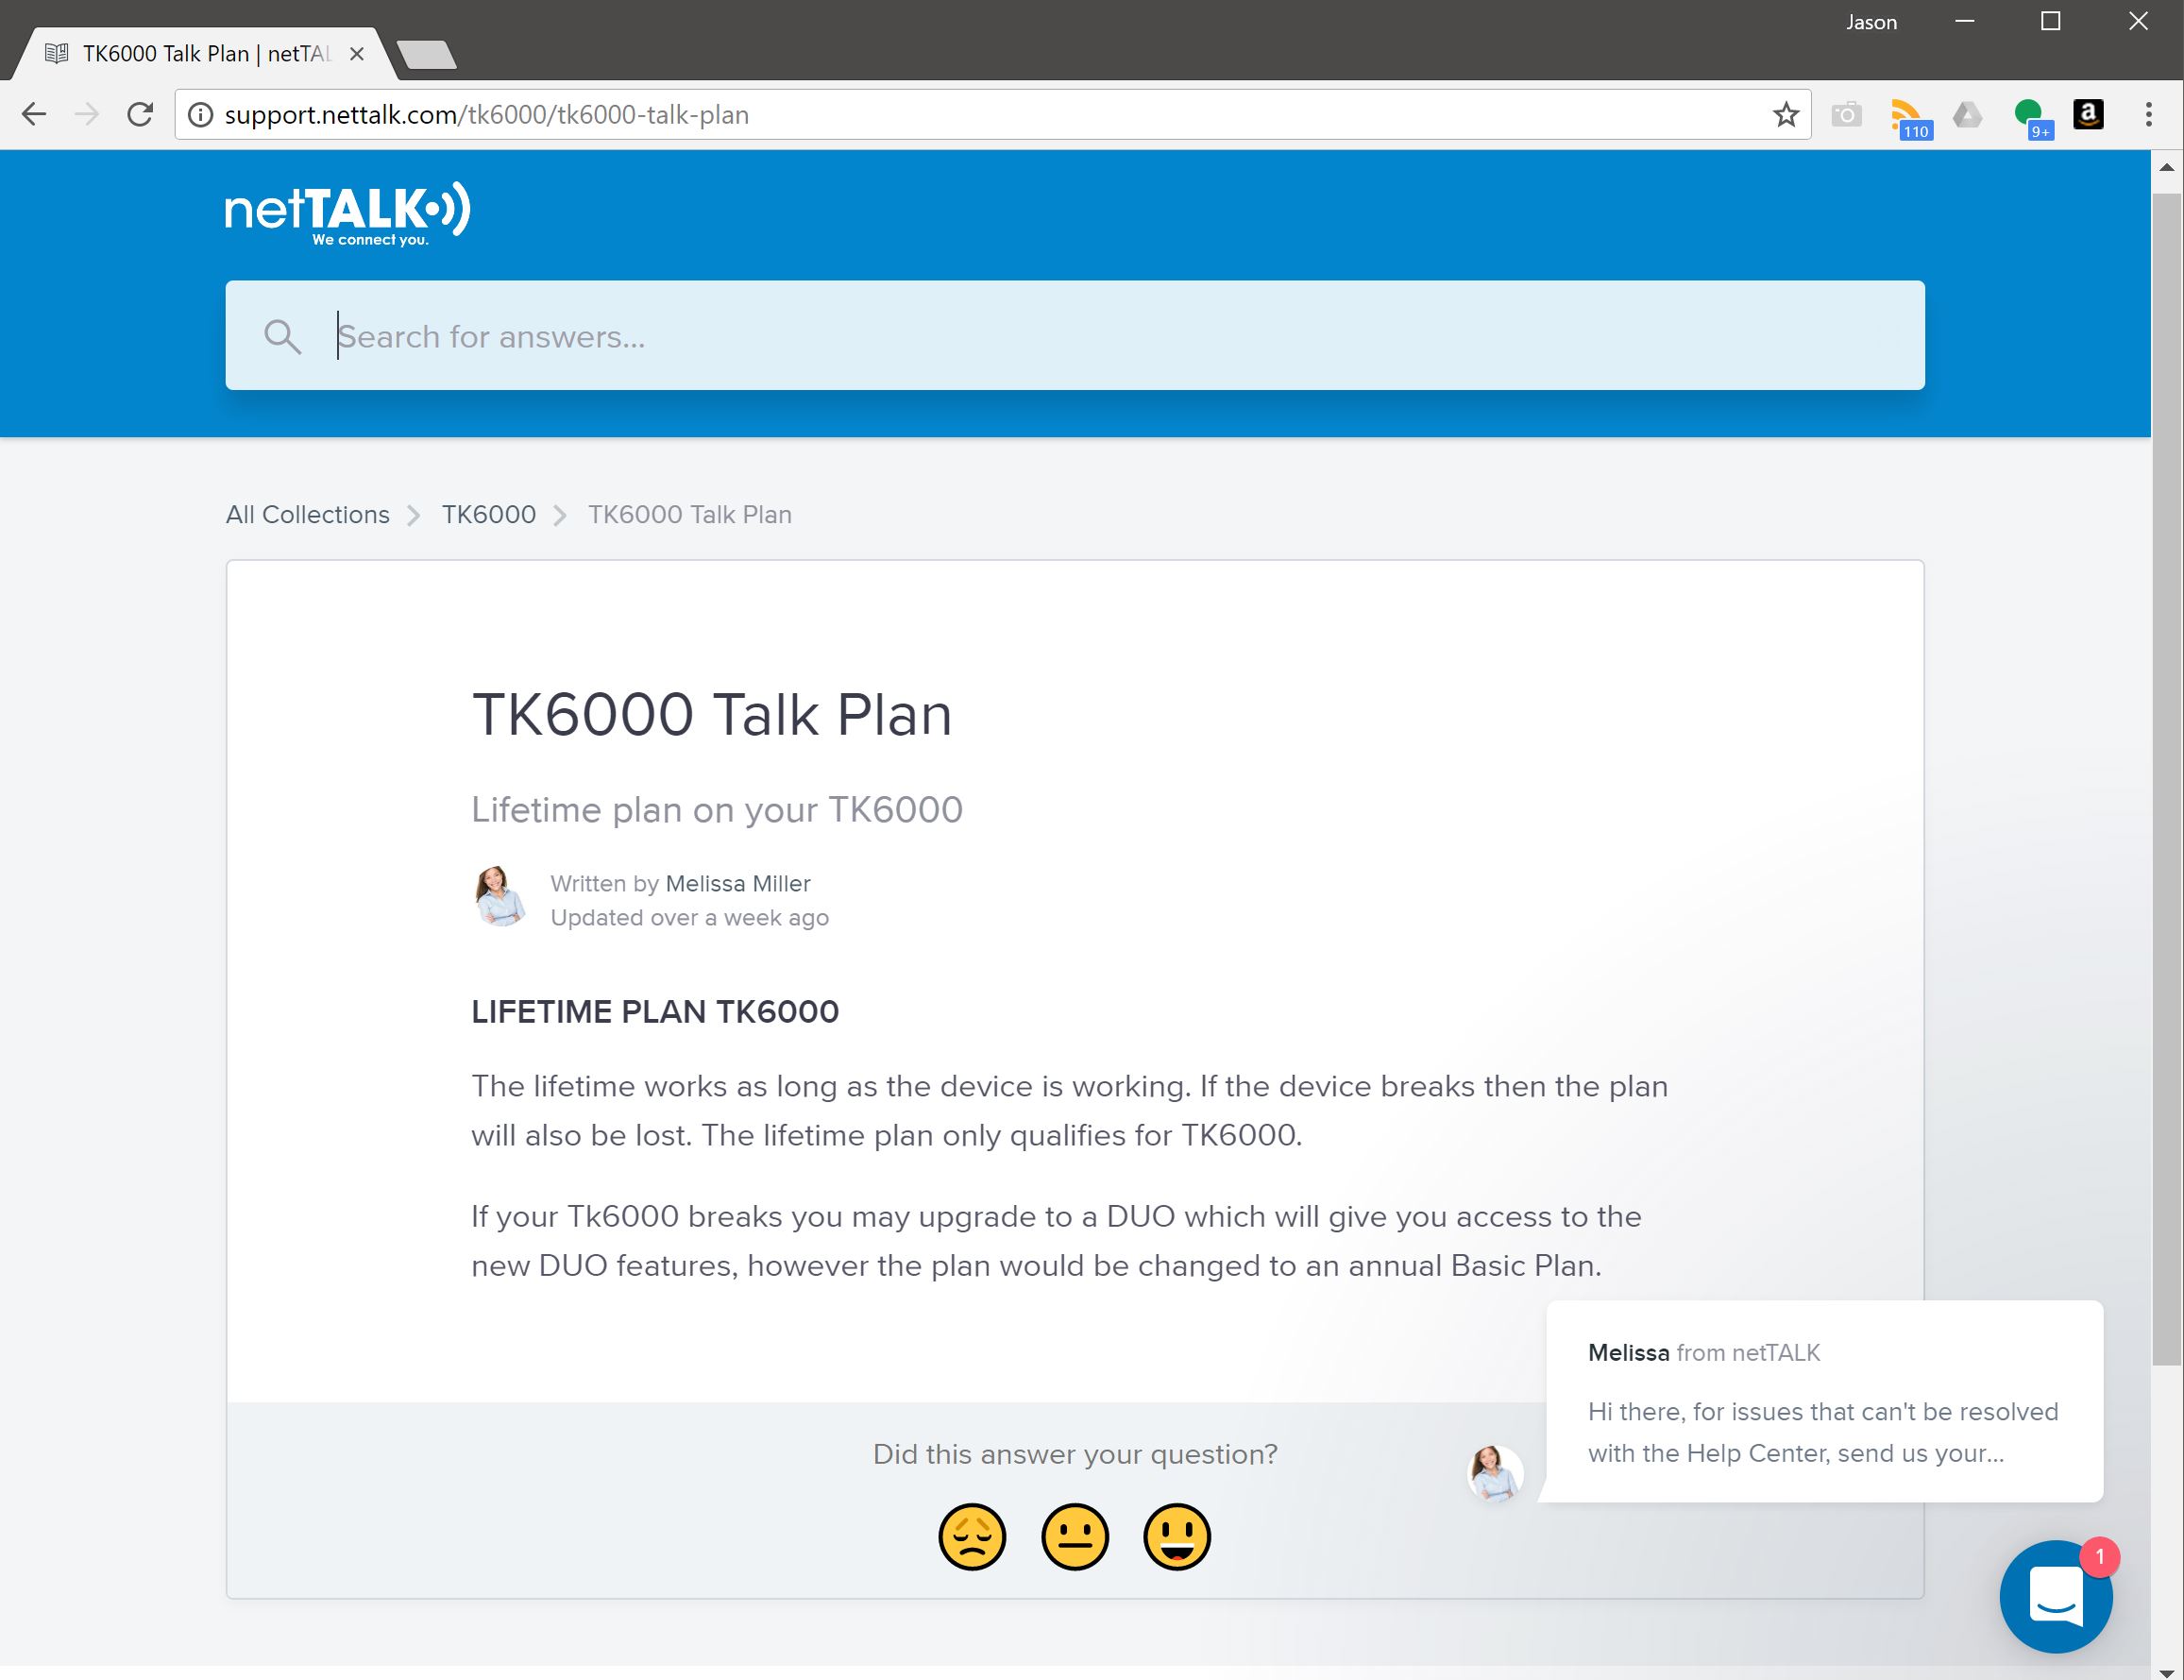 Screen capture of help for TK6000 lifetime plan